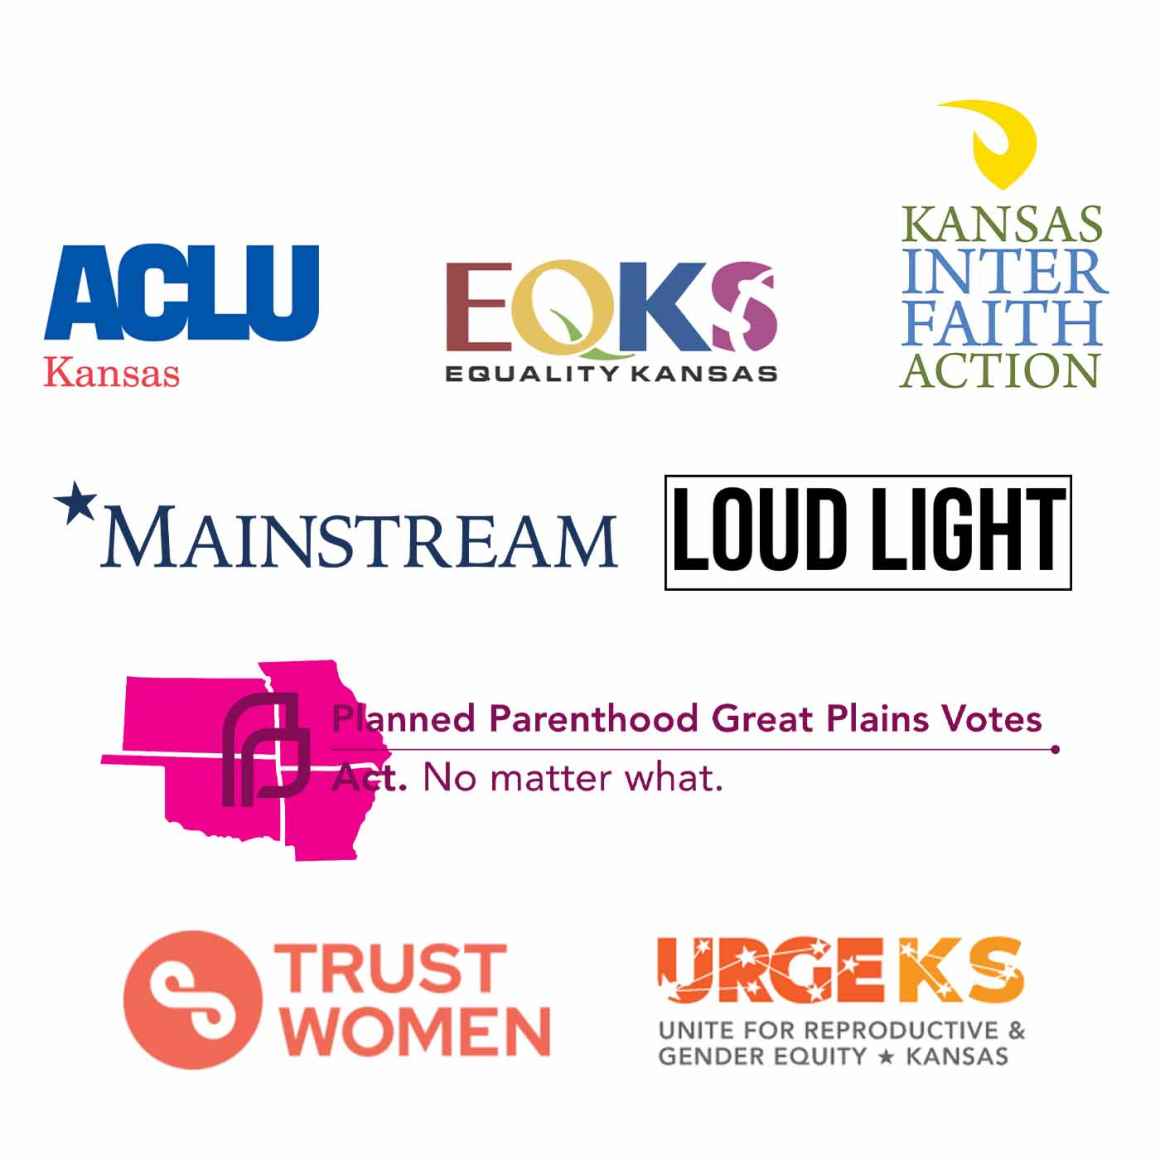 Logos for ACLU of Kansas, Equality Kansas, Kansas Interfaith Action, Mainstream, Loud Light, Planned Parenthood Great Plains Votes, Trust Women, and Urge Kansas